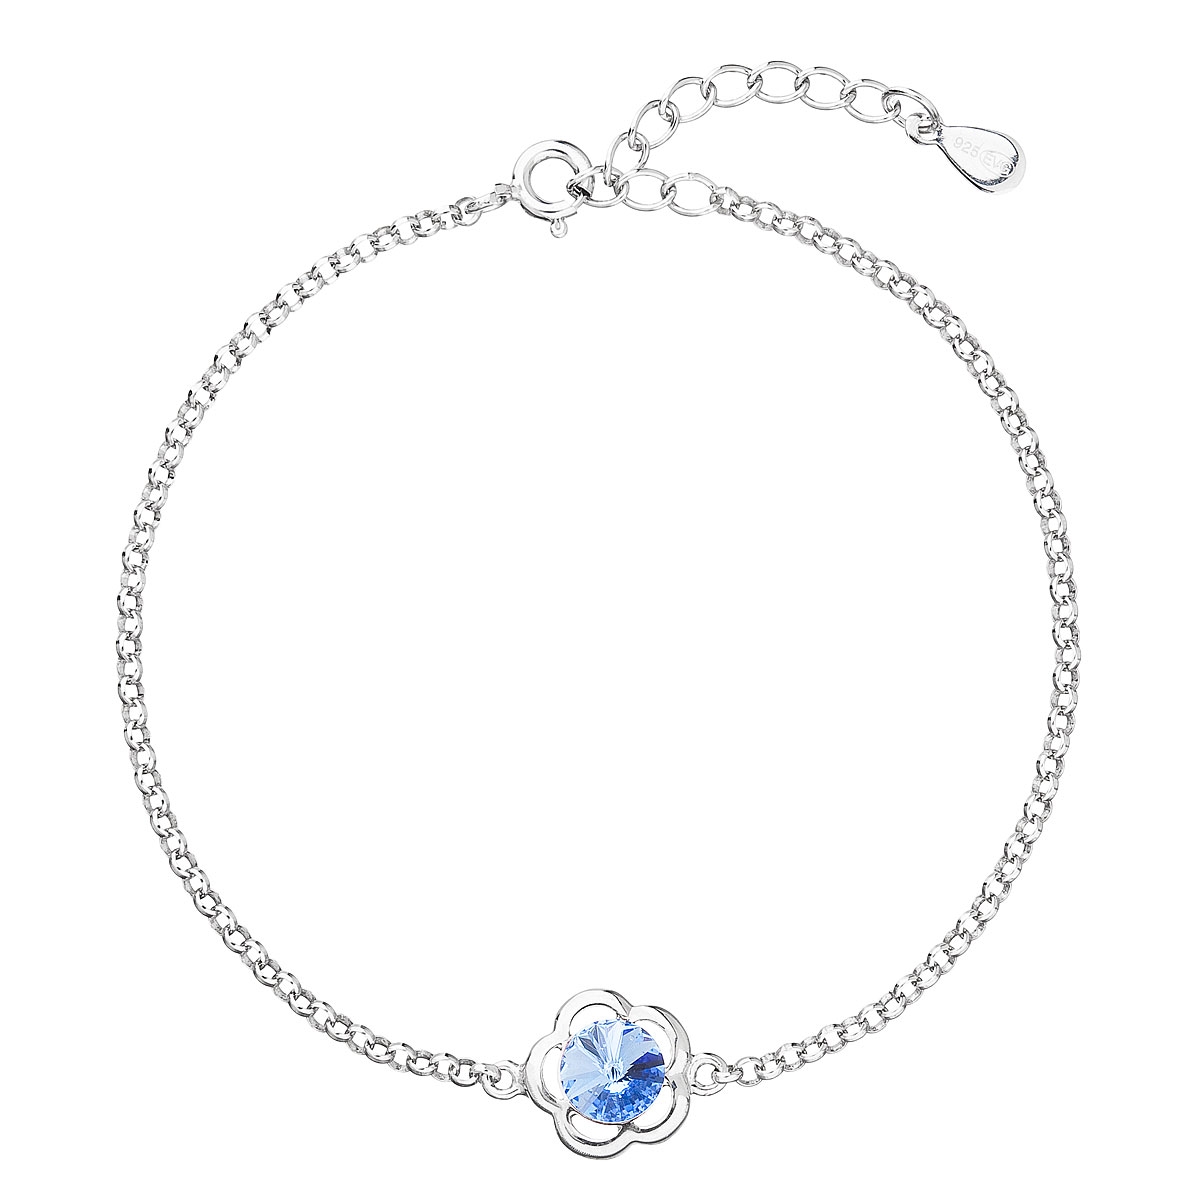 Stříbrný náramek s tyrkysovým kamenem Crystals from Swarovski® Light Sapphire EG7057-AQ